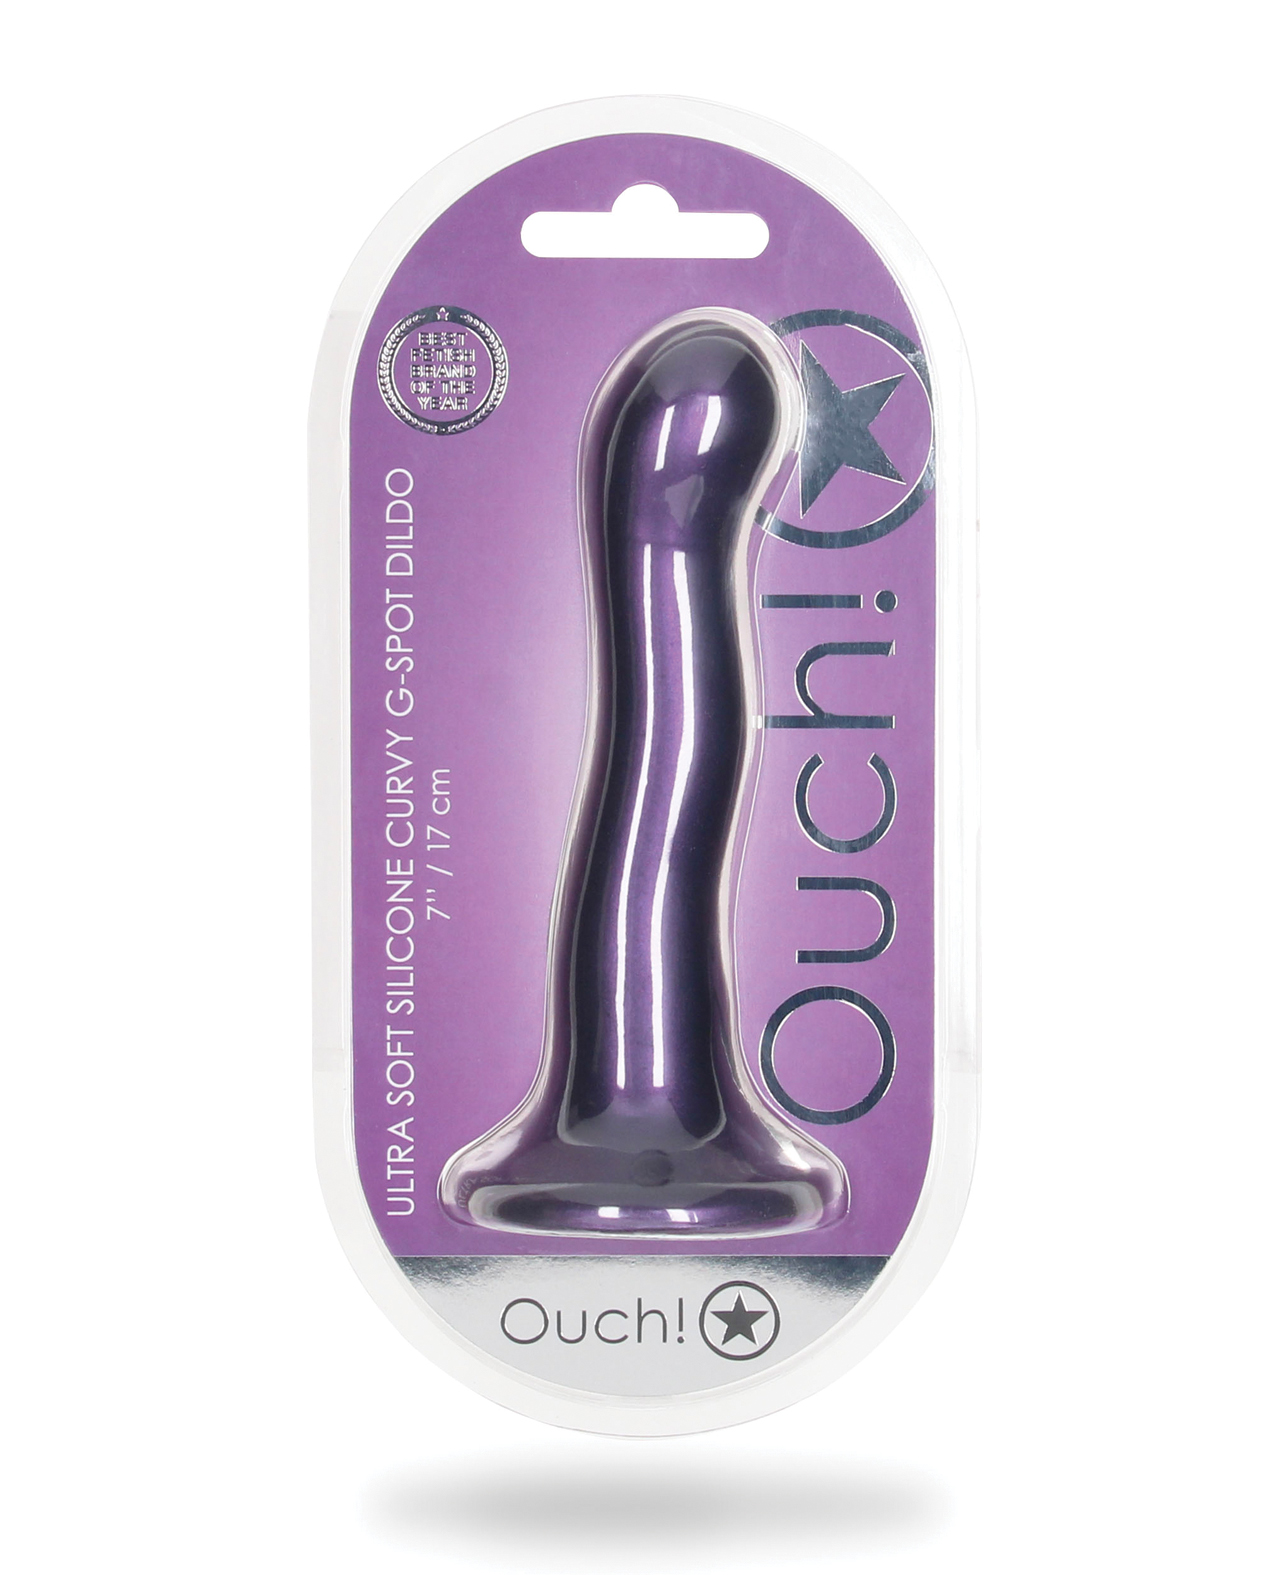 Curvy G-spot Dildo in purple in a purple clamshell package